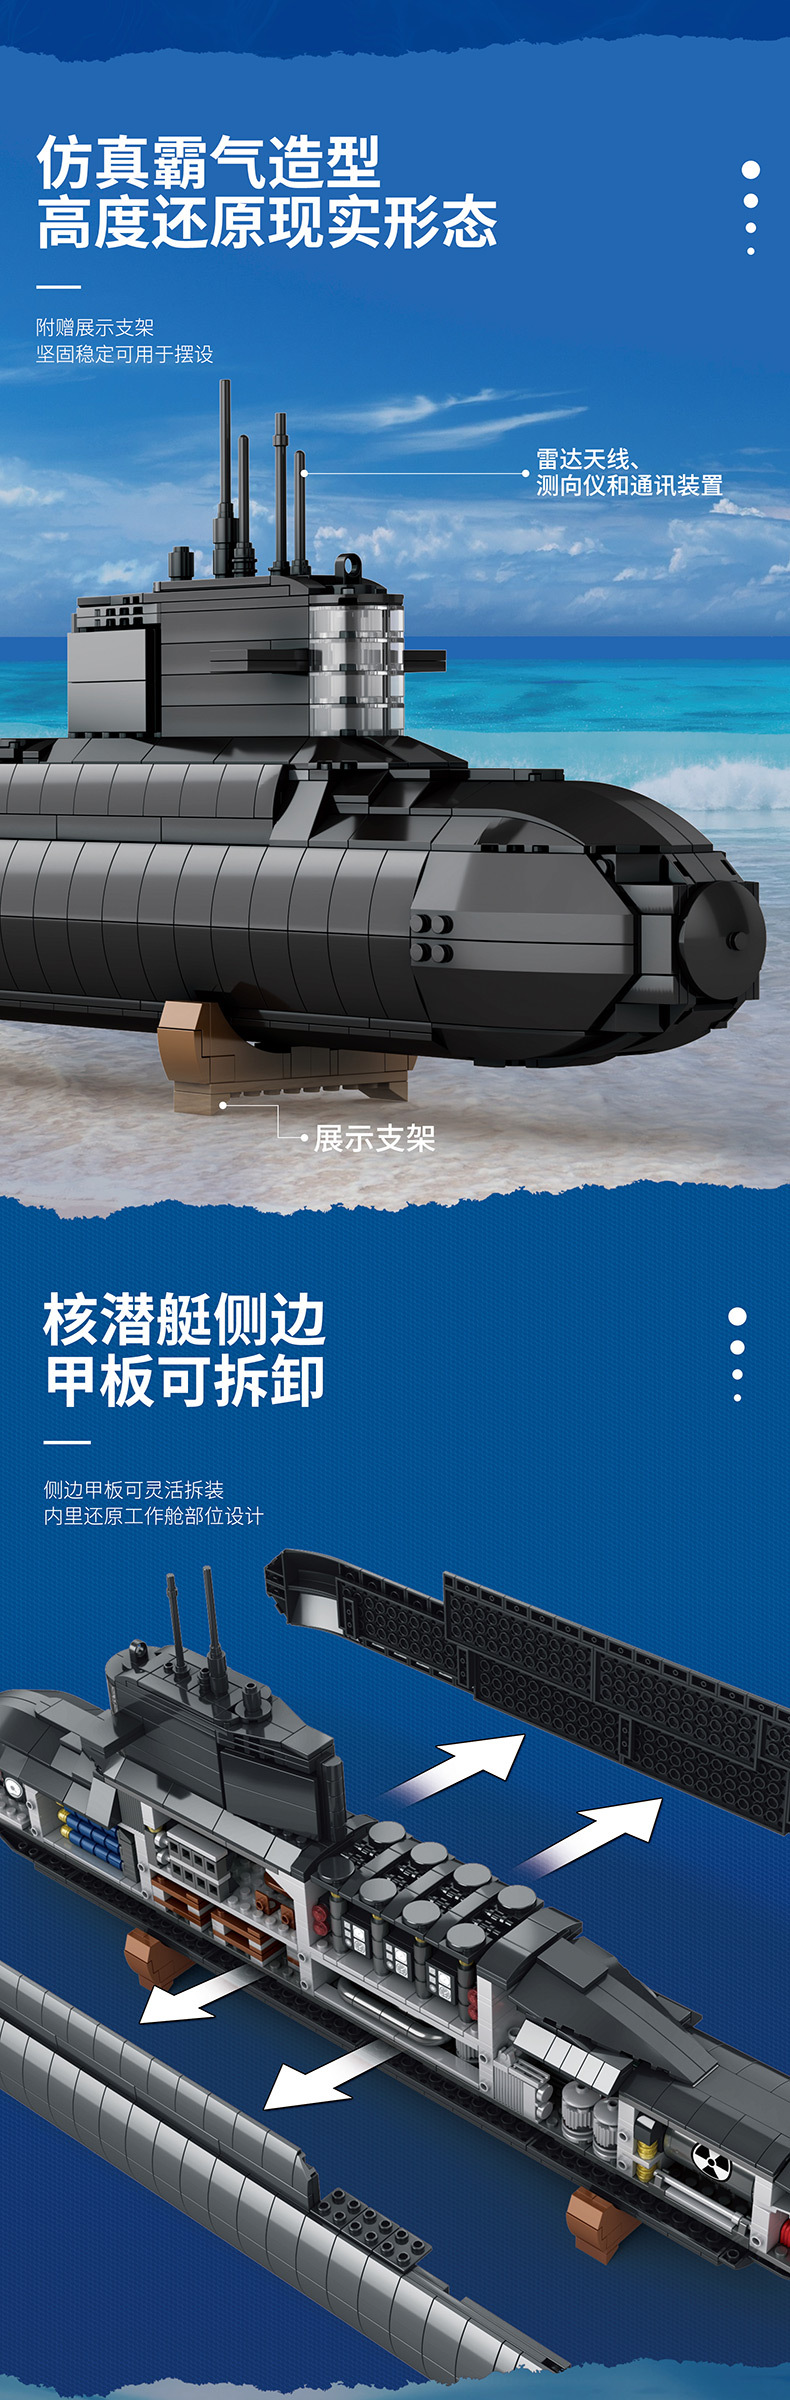 REOBRIX 800 Submarino Nuclear Estratégico Serie Militar Juego de Juguetes de Bloques de Construcción